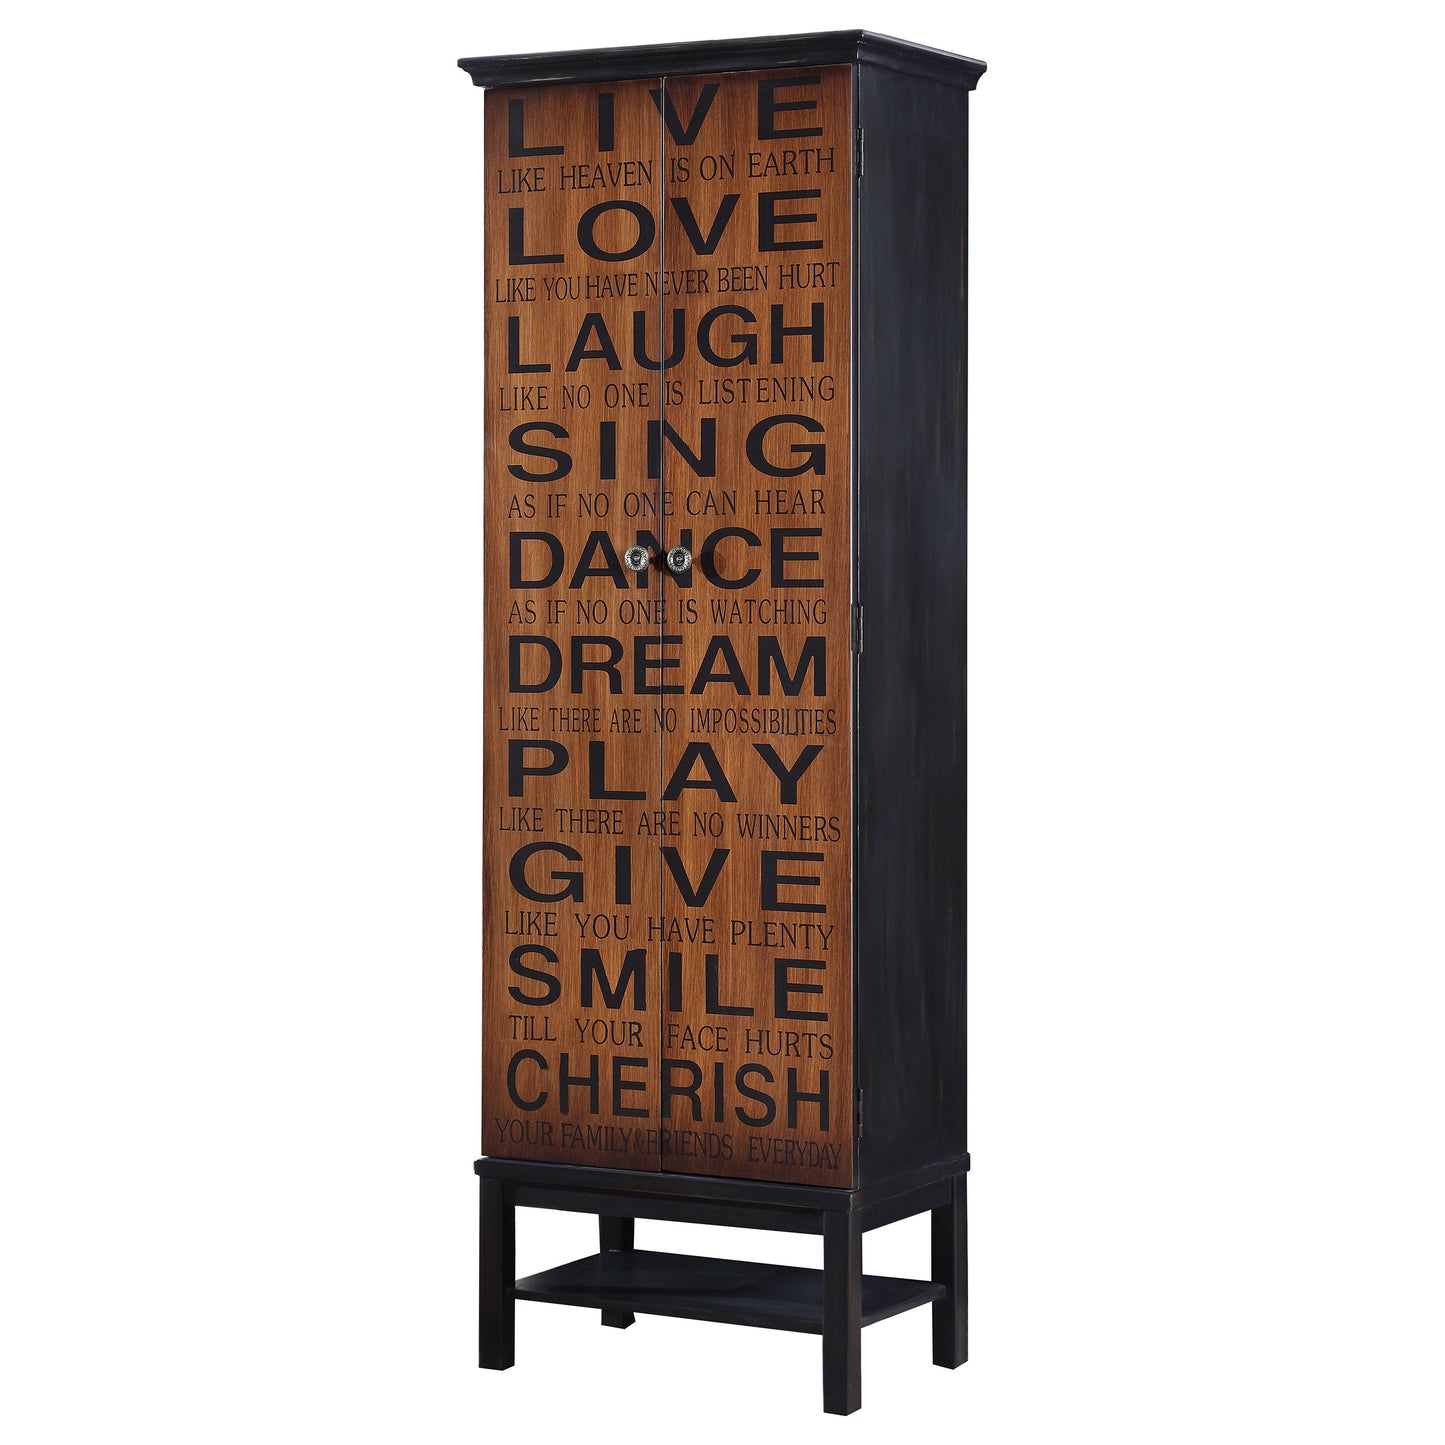 Lovegood 2-door Wood Tall Storage Cabinet Black and Brown